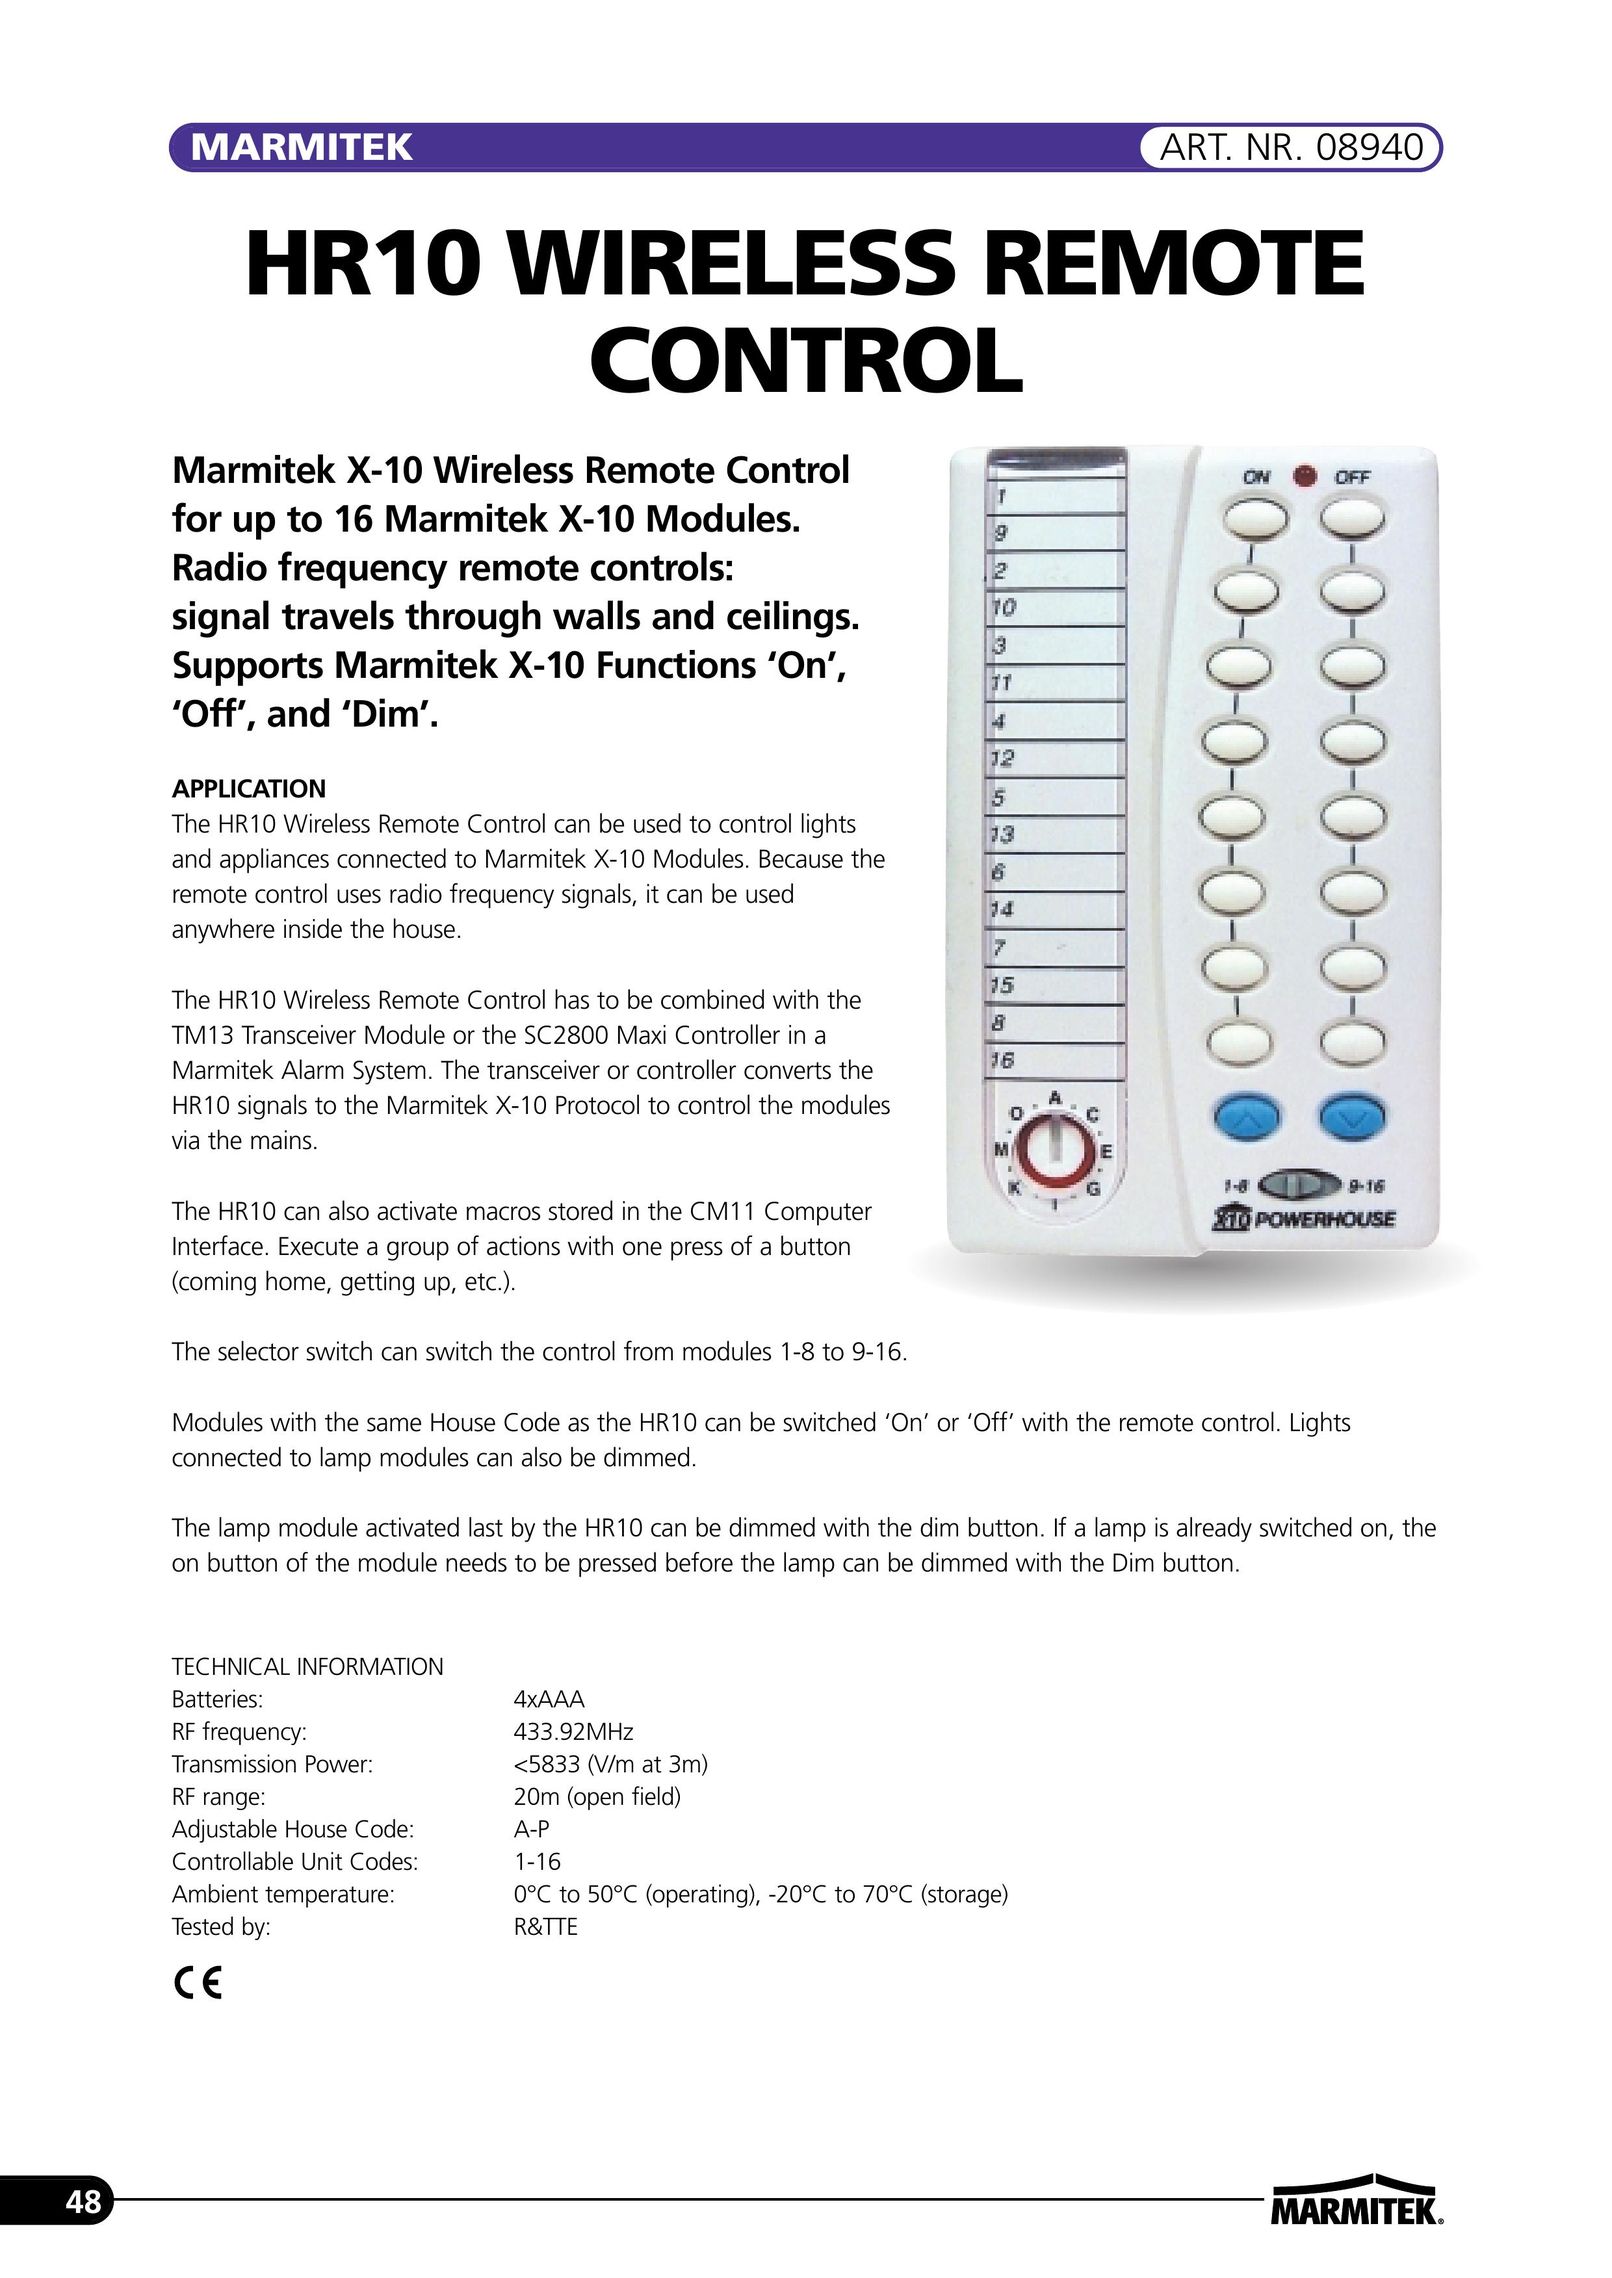 Marmitek HR10 Universal Remote User Manual